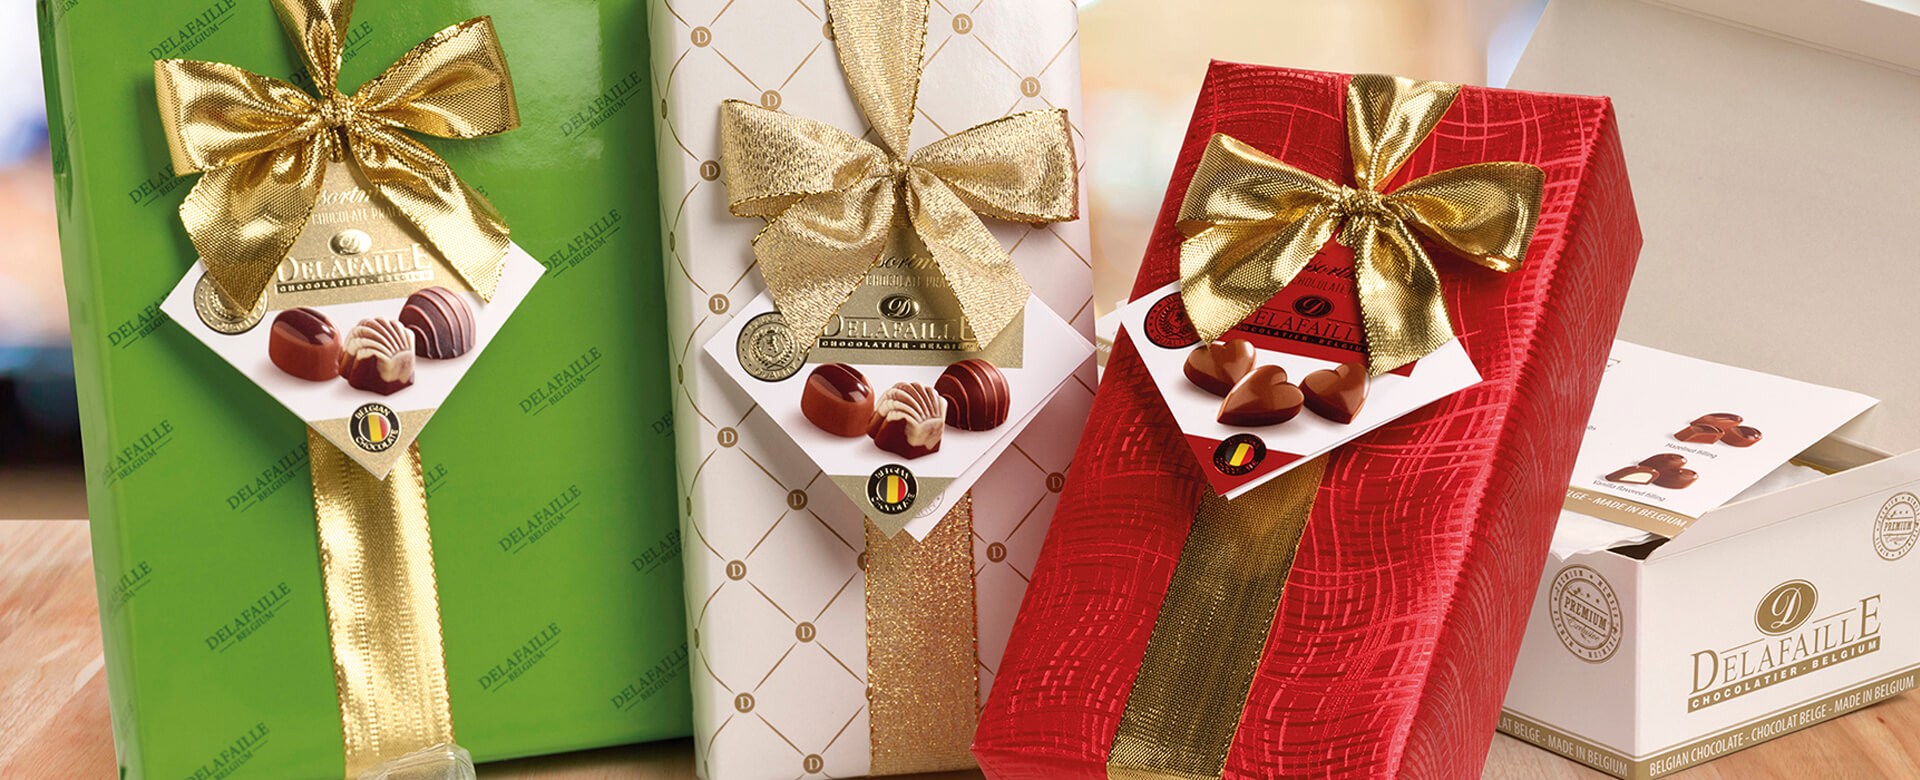 Delafaille chocolate Gift-wrap